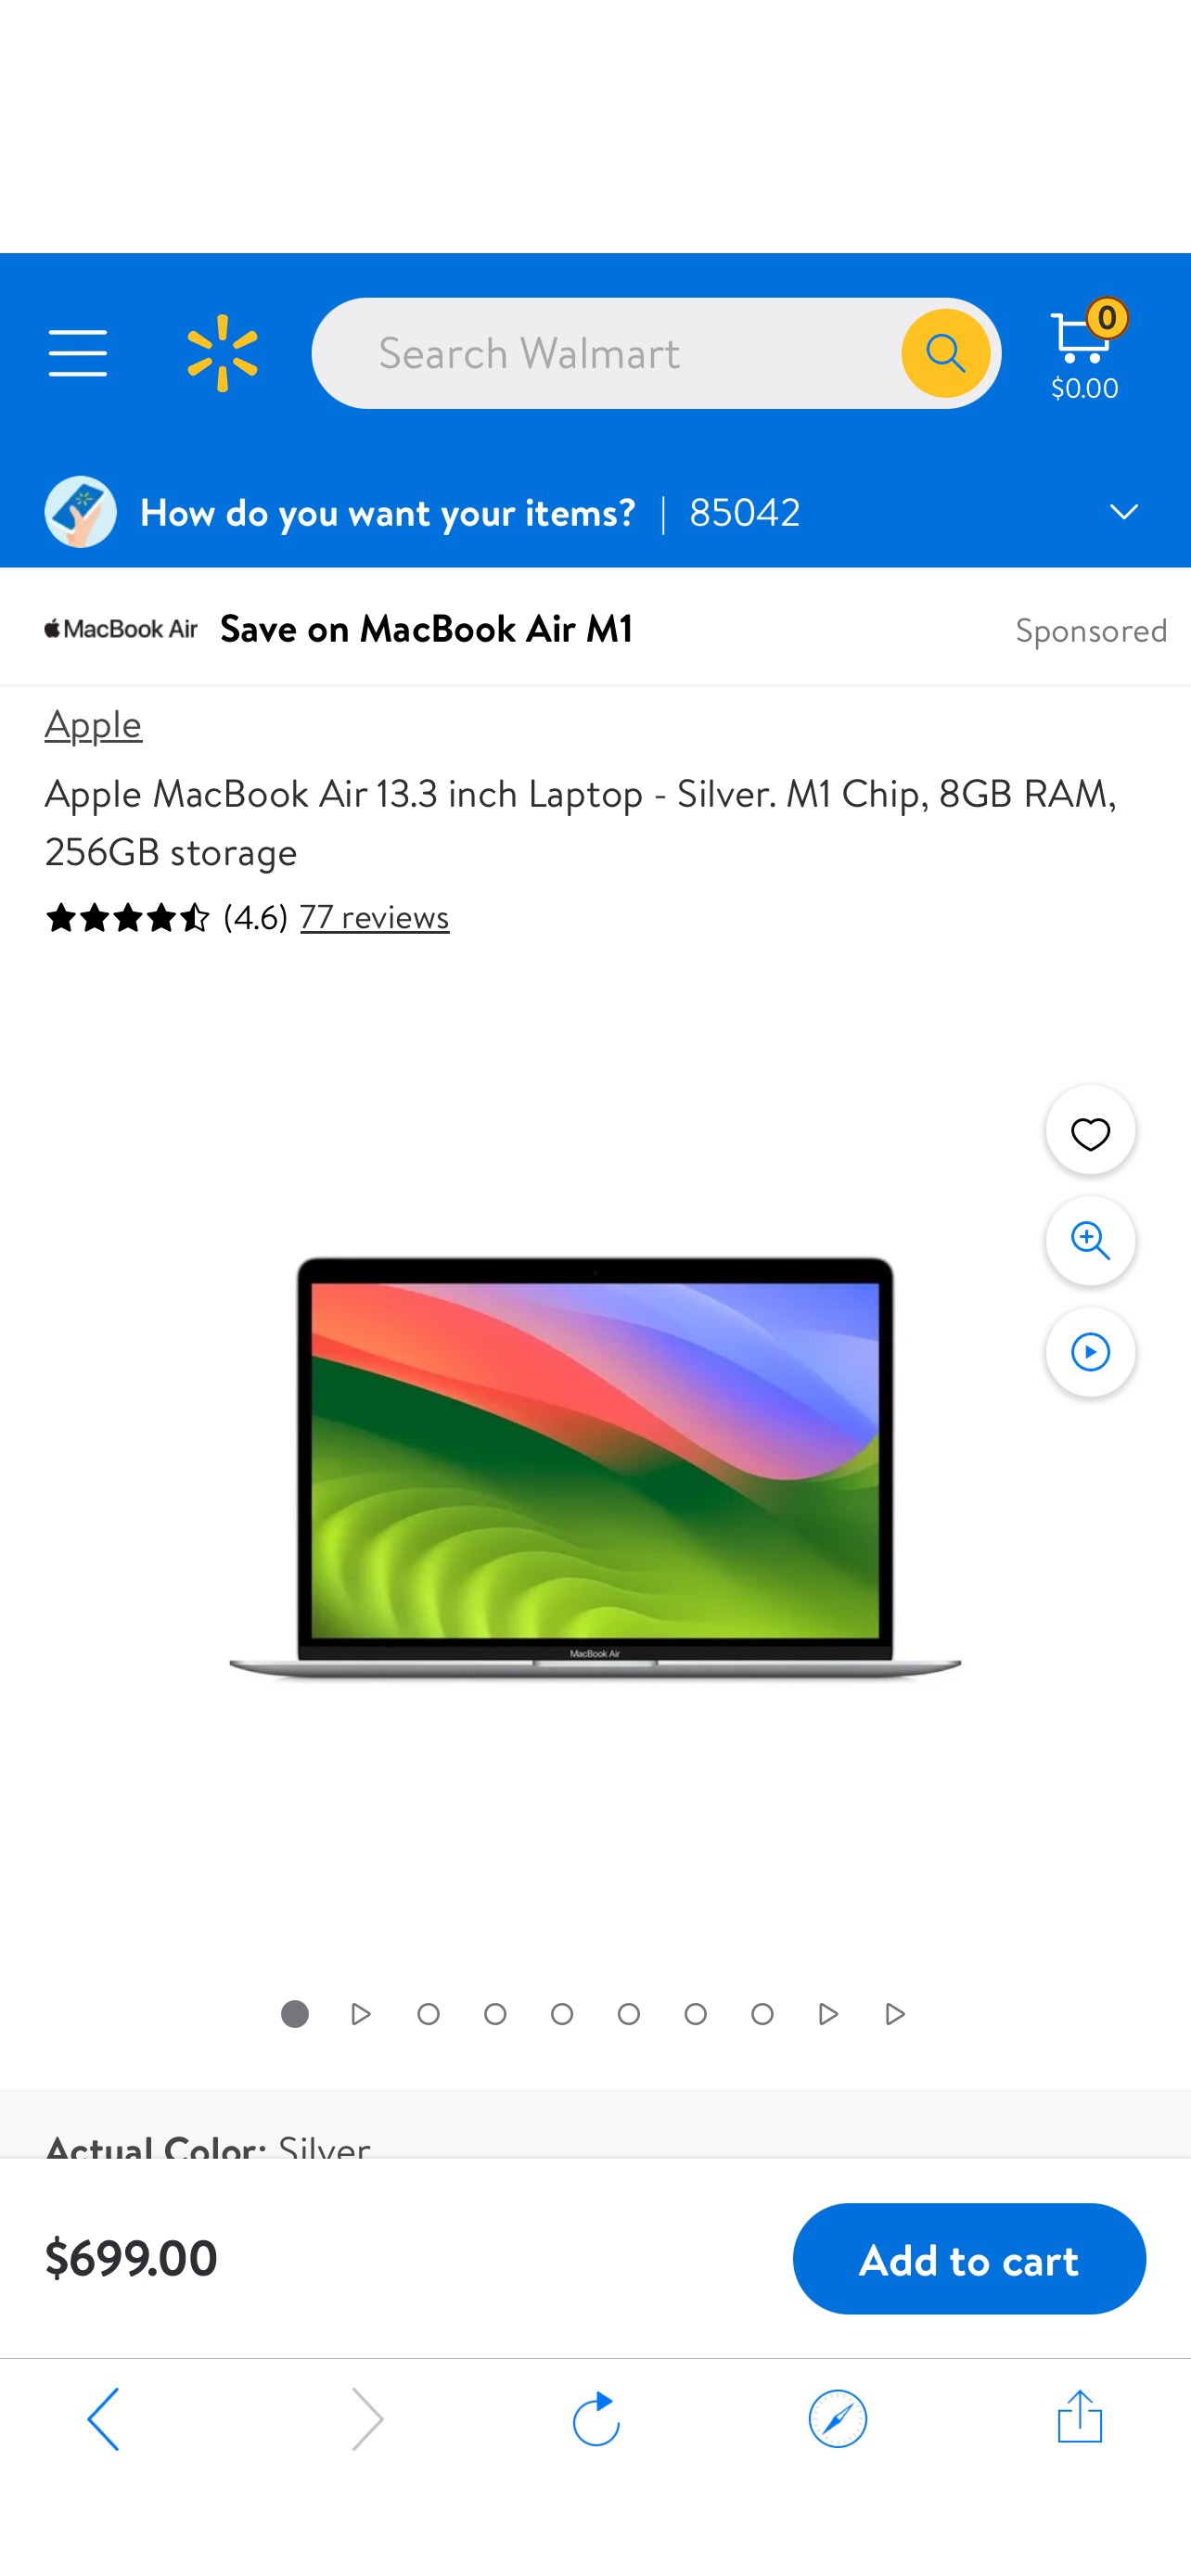 Apple MacBook Air 13.3 inch Laptop - Silver. M1 Chip, 8GB RAM, 256GB storage - Walmart.com